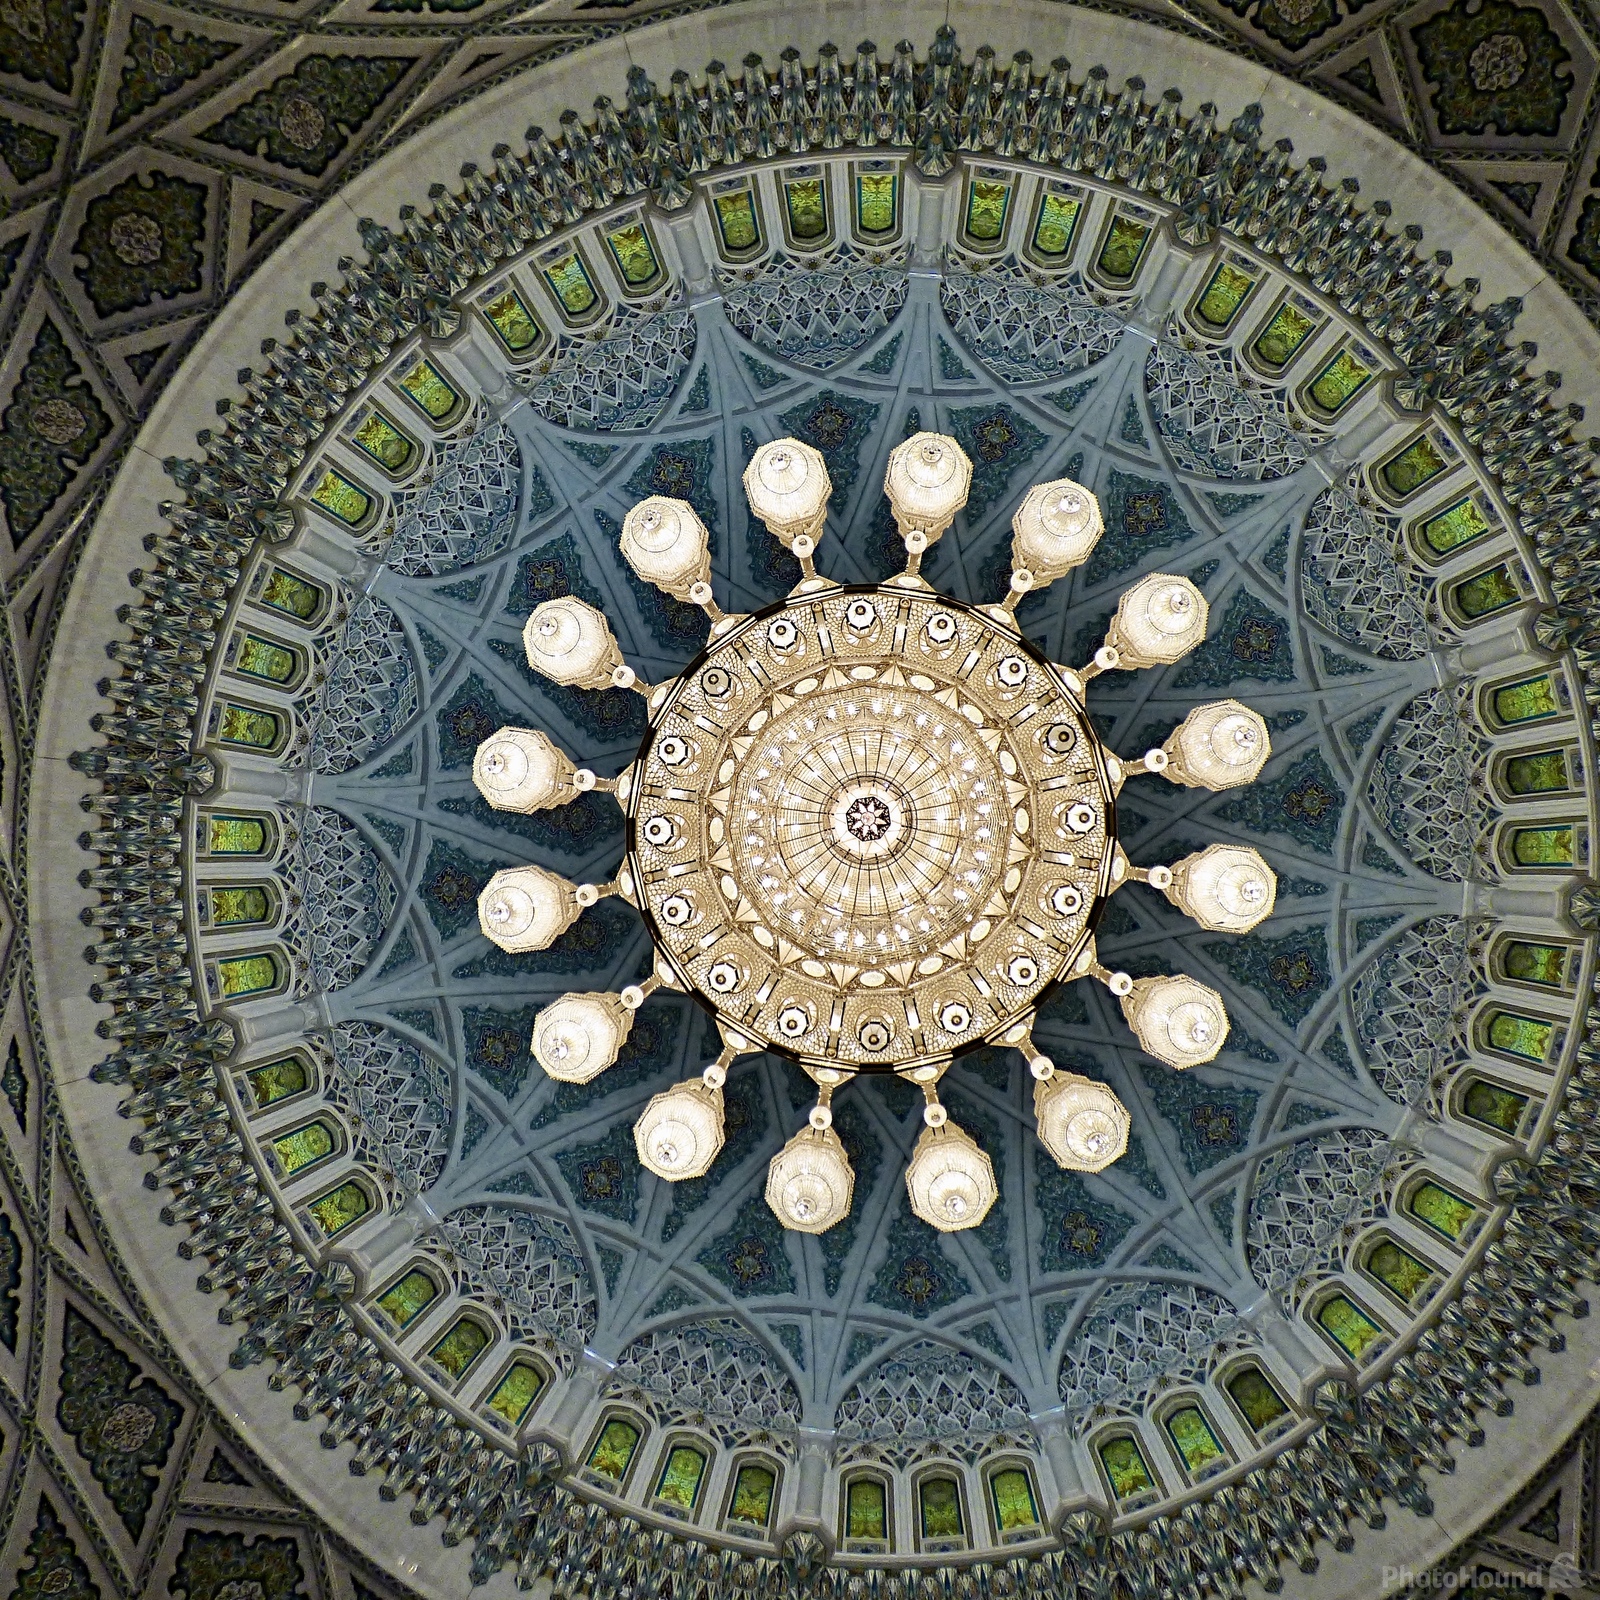 Image of Sultan Qaboos Grand Mosque, Muscat by Alexandra Sharrock